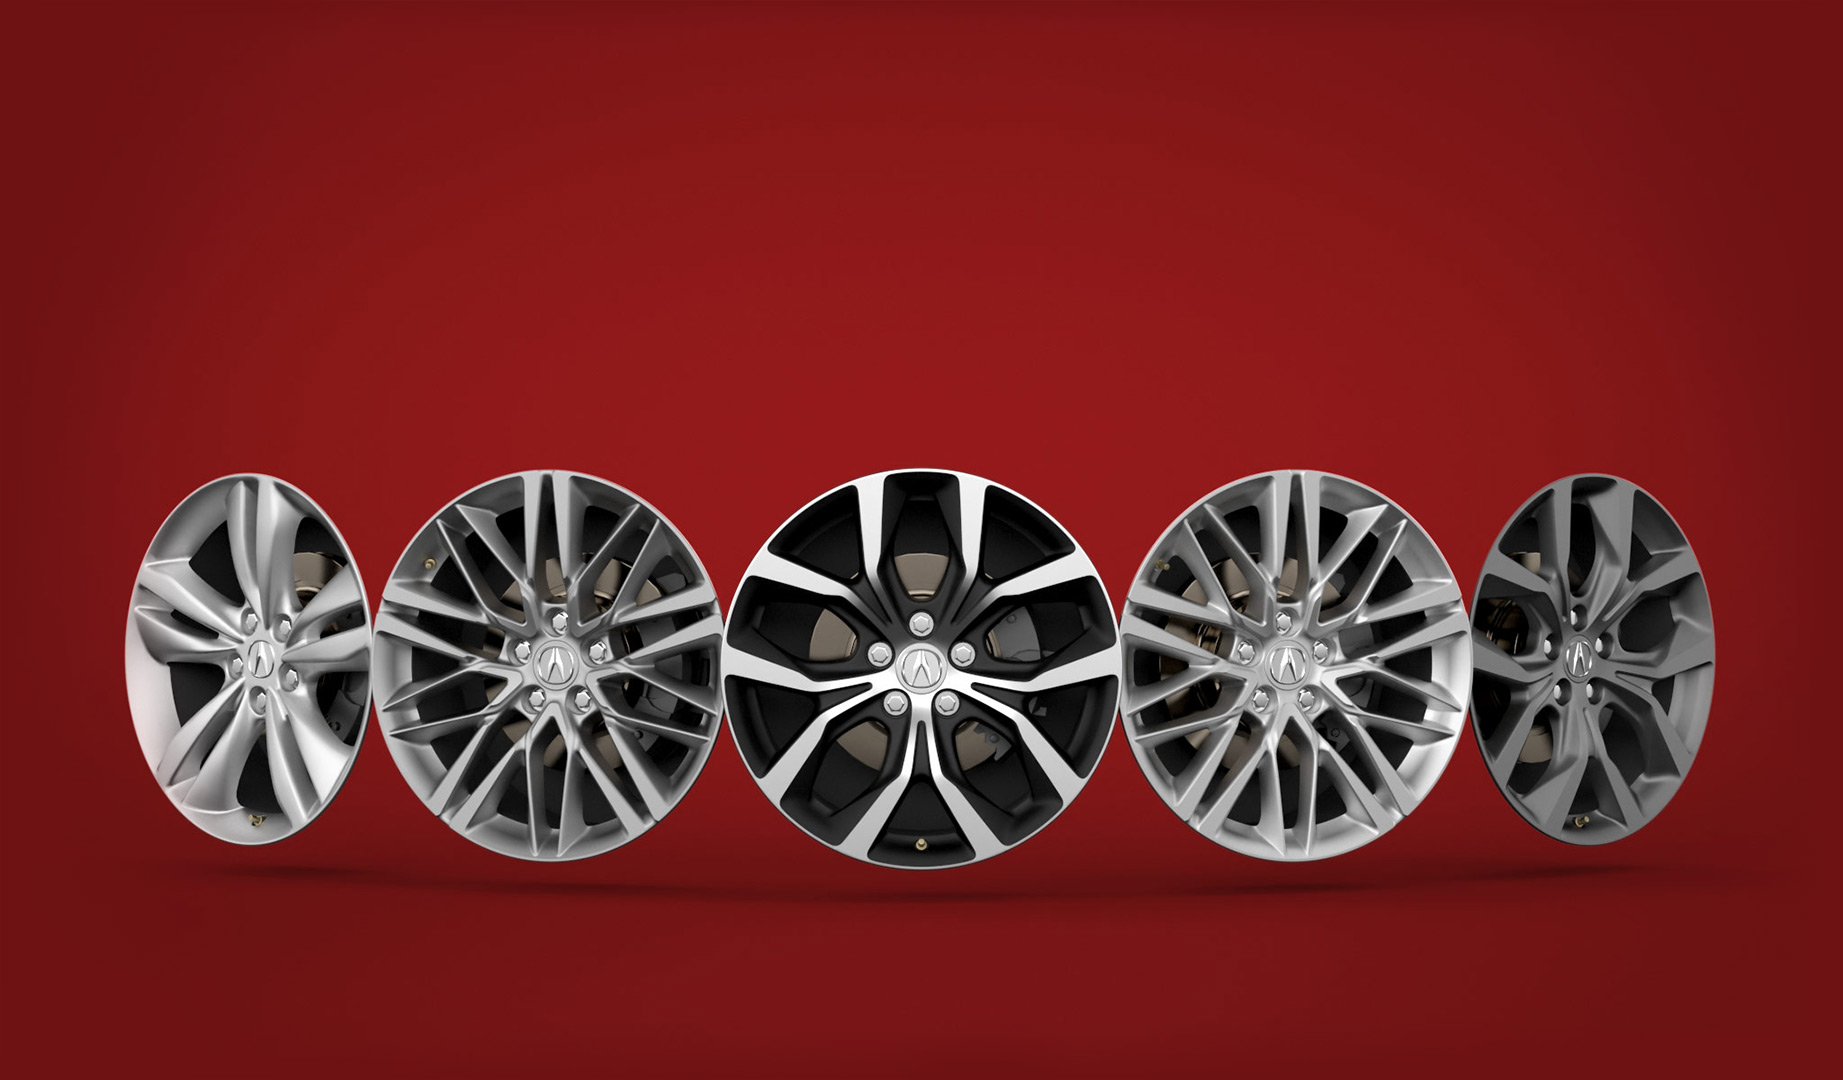 AR new product development of Honda wheel designs